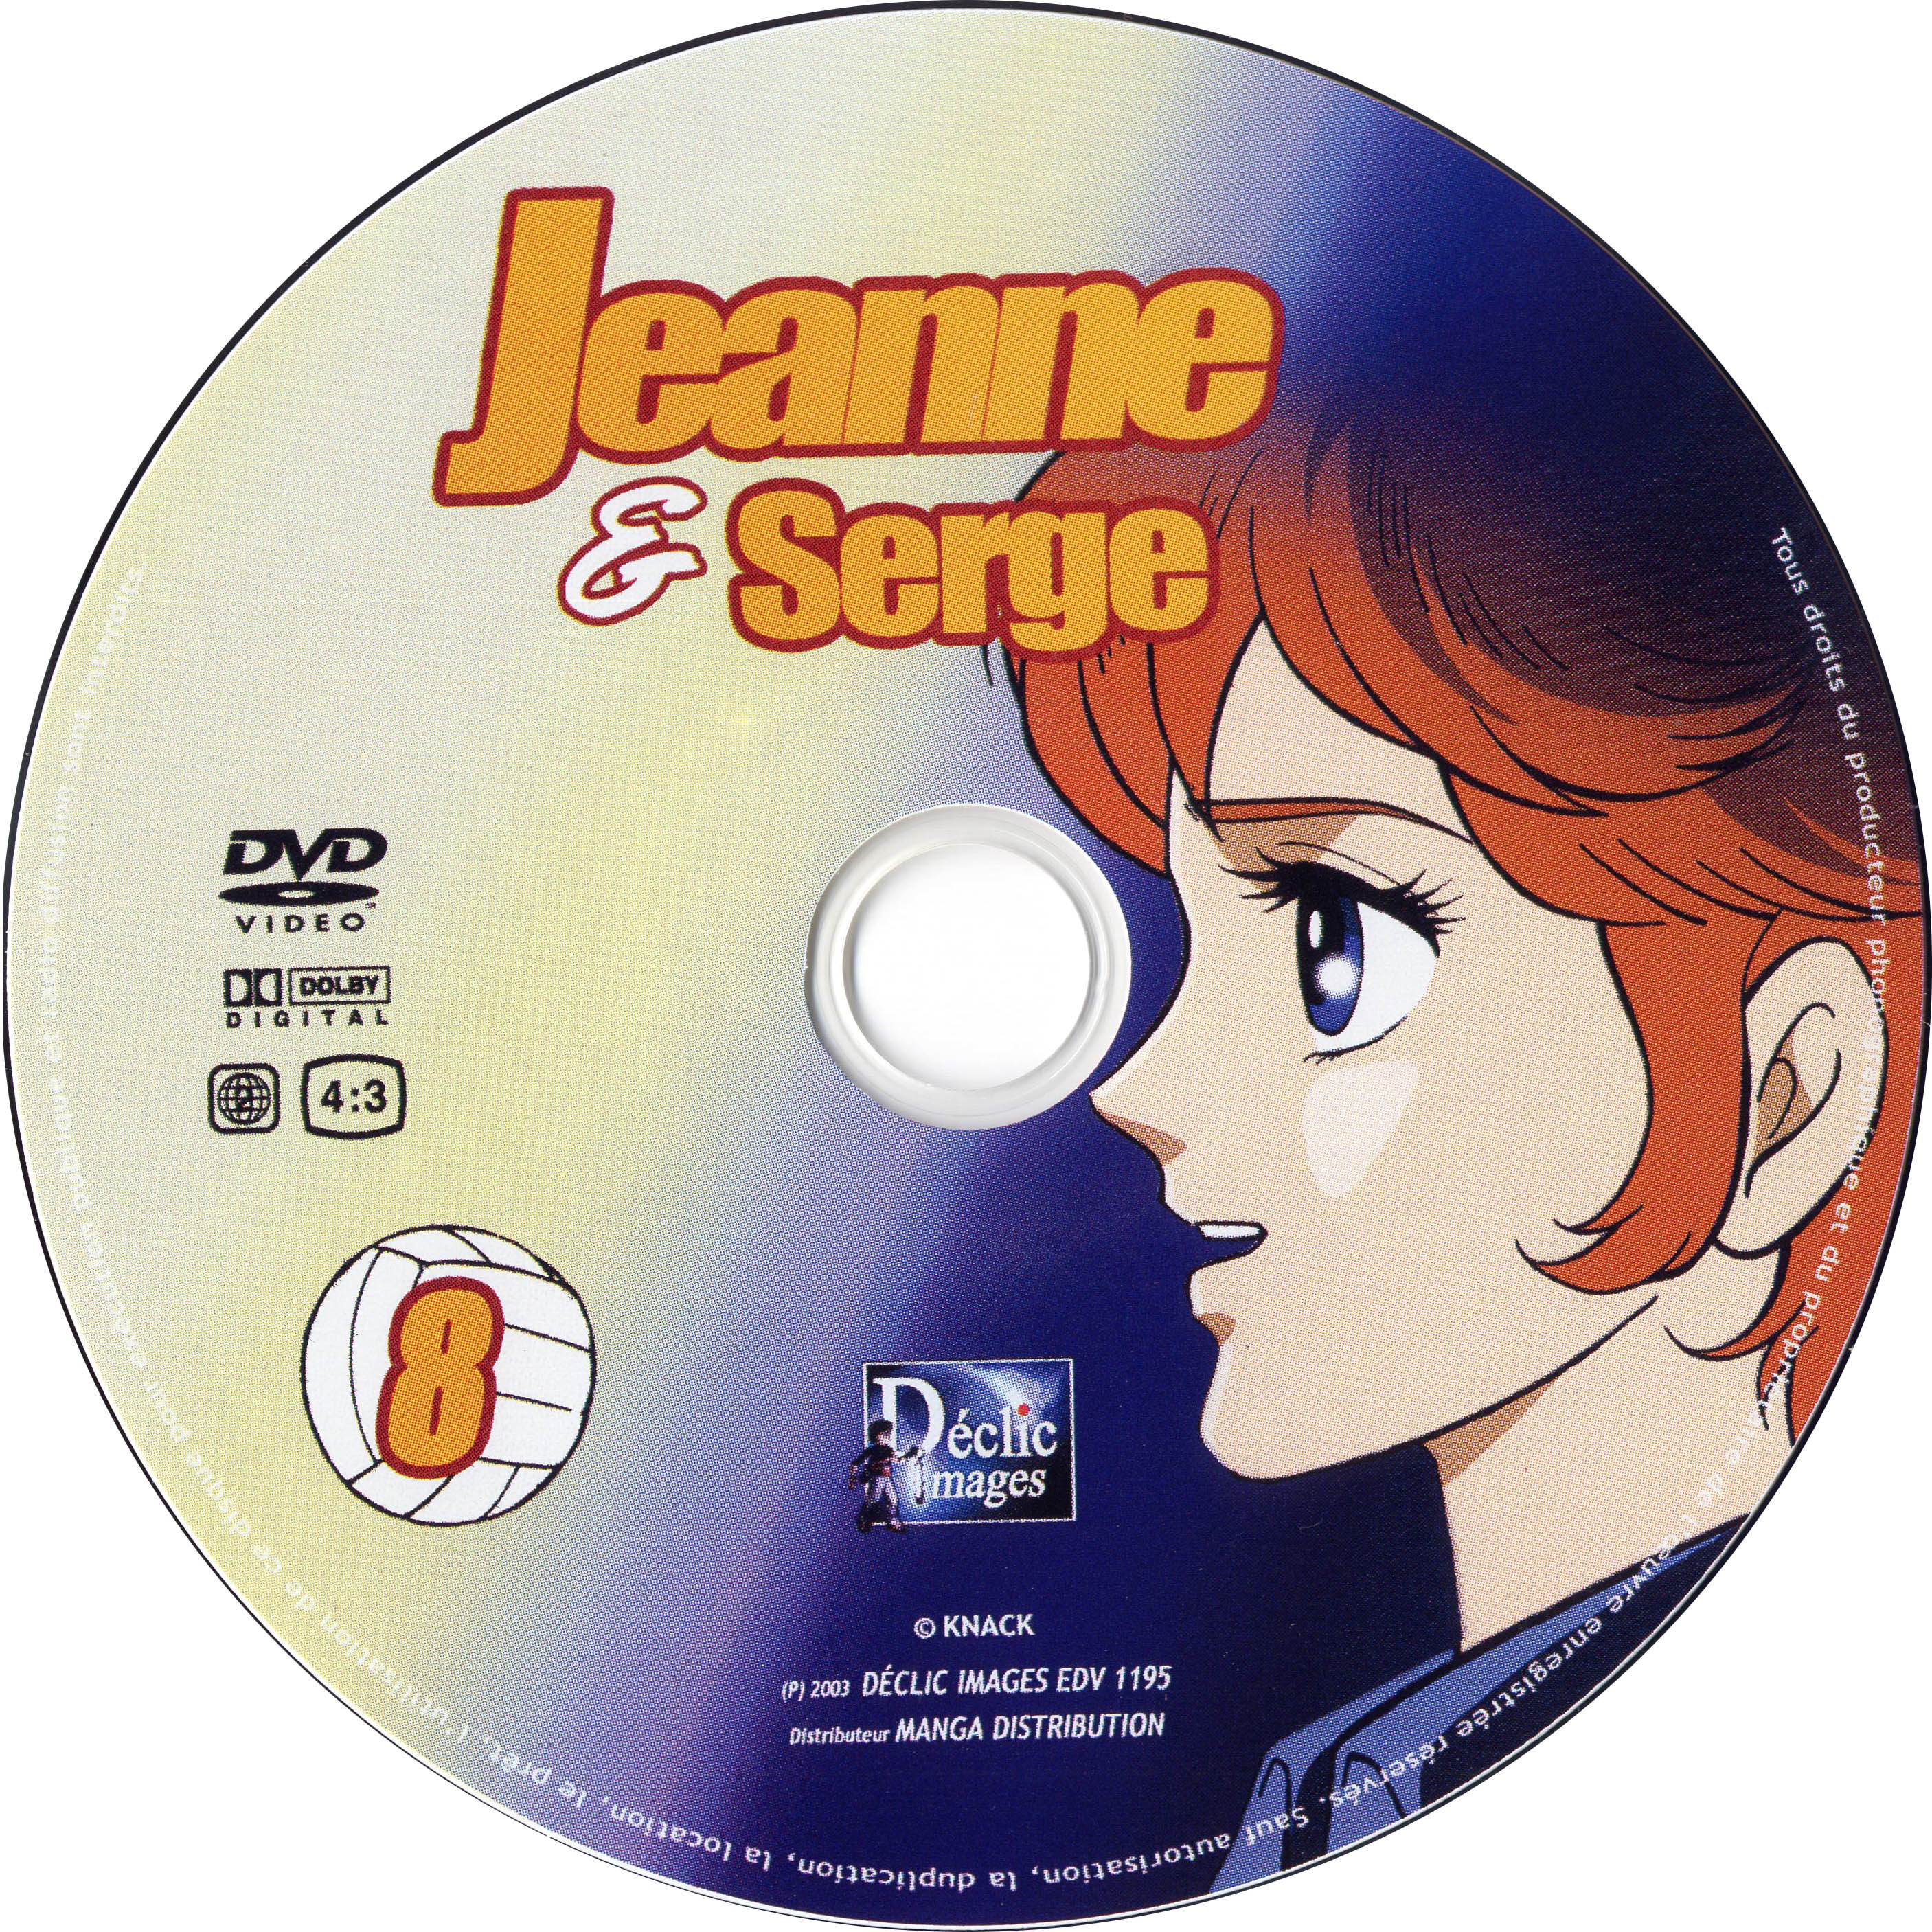 Jeanne et Serge vol 08